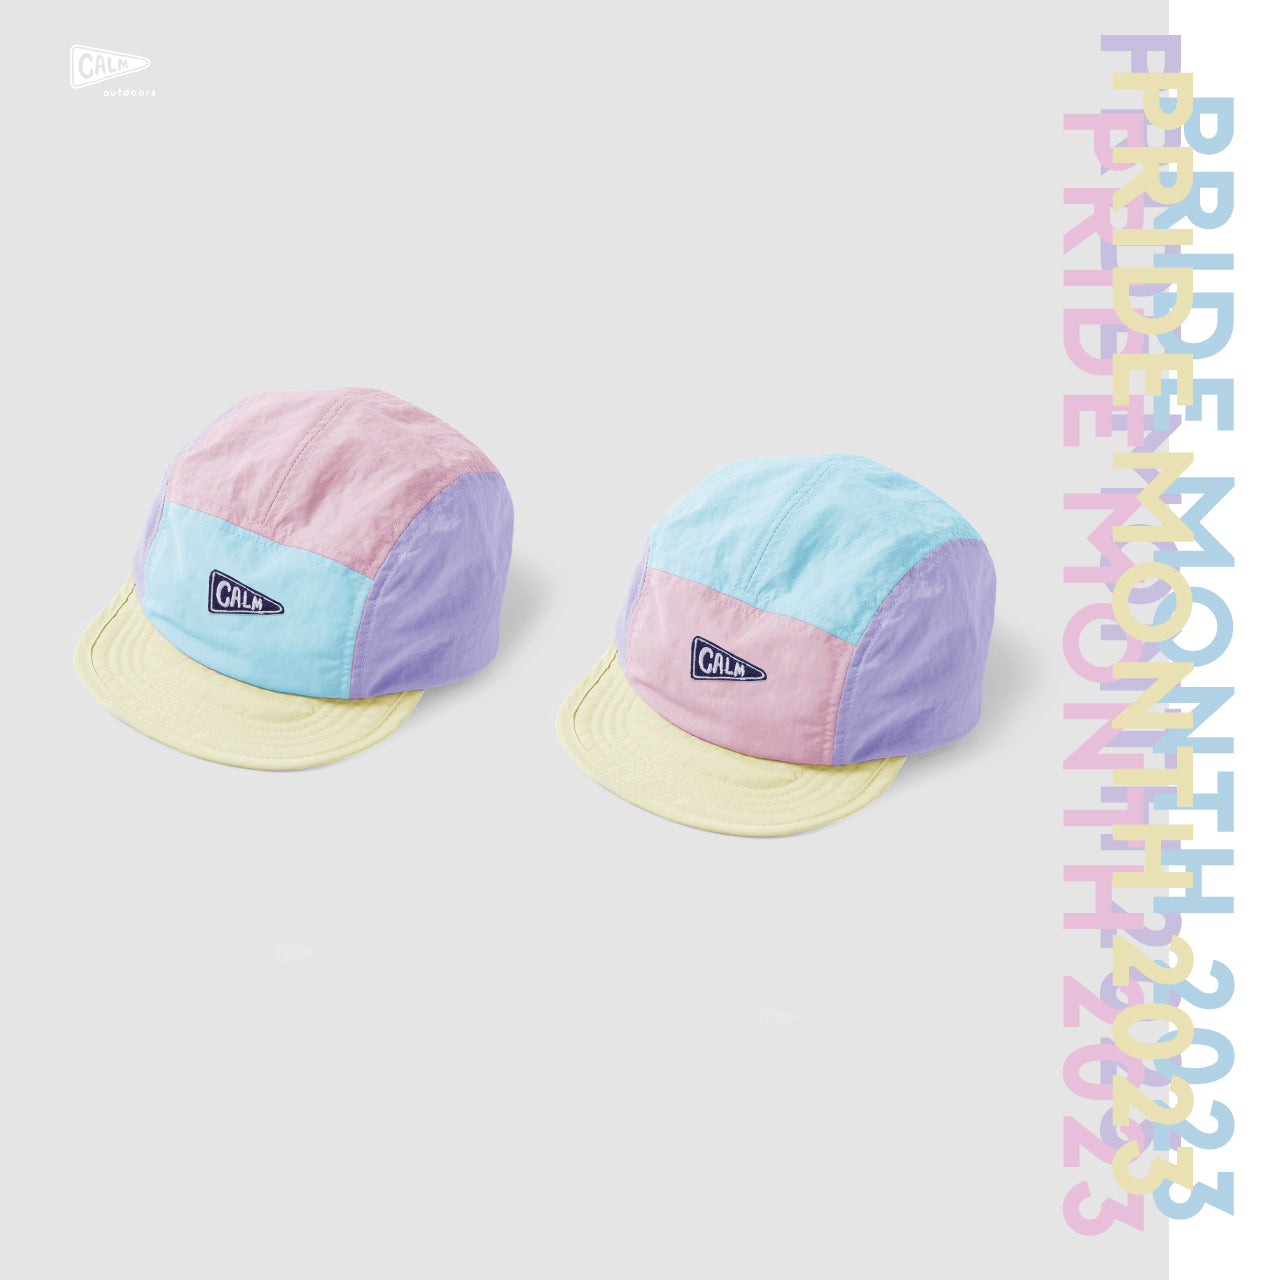 Calmoutdoors 5 Panel Hat 帽 [Pink/Blue]